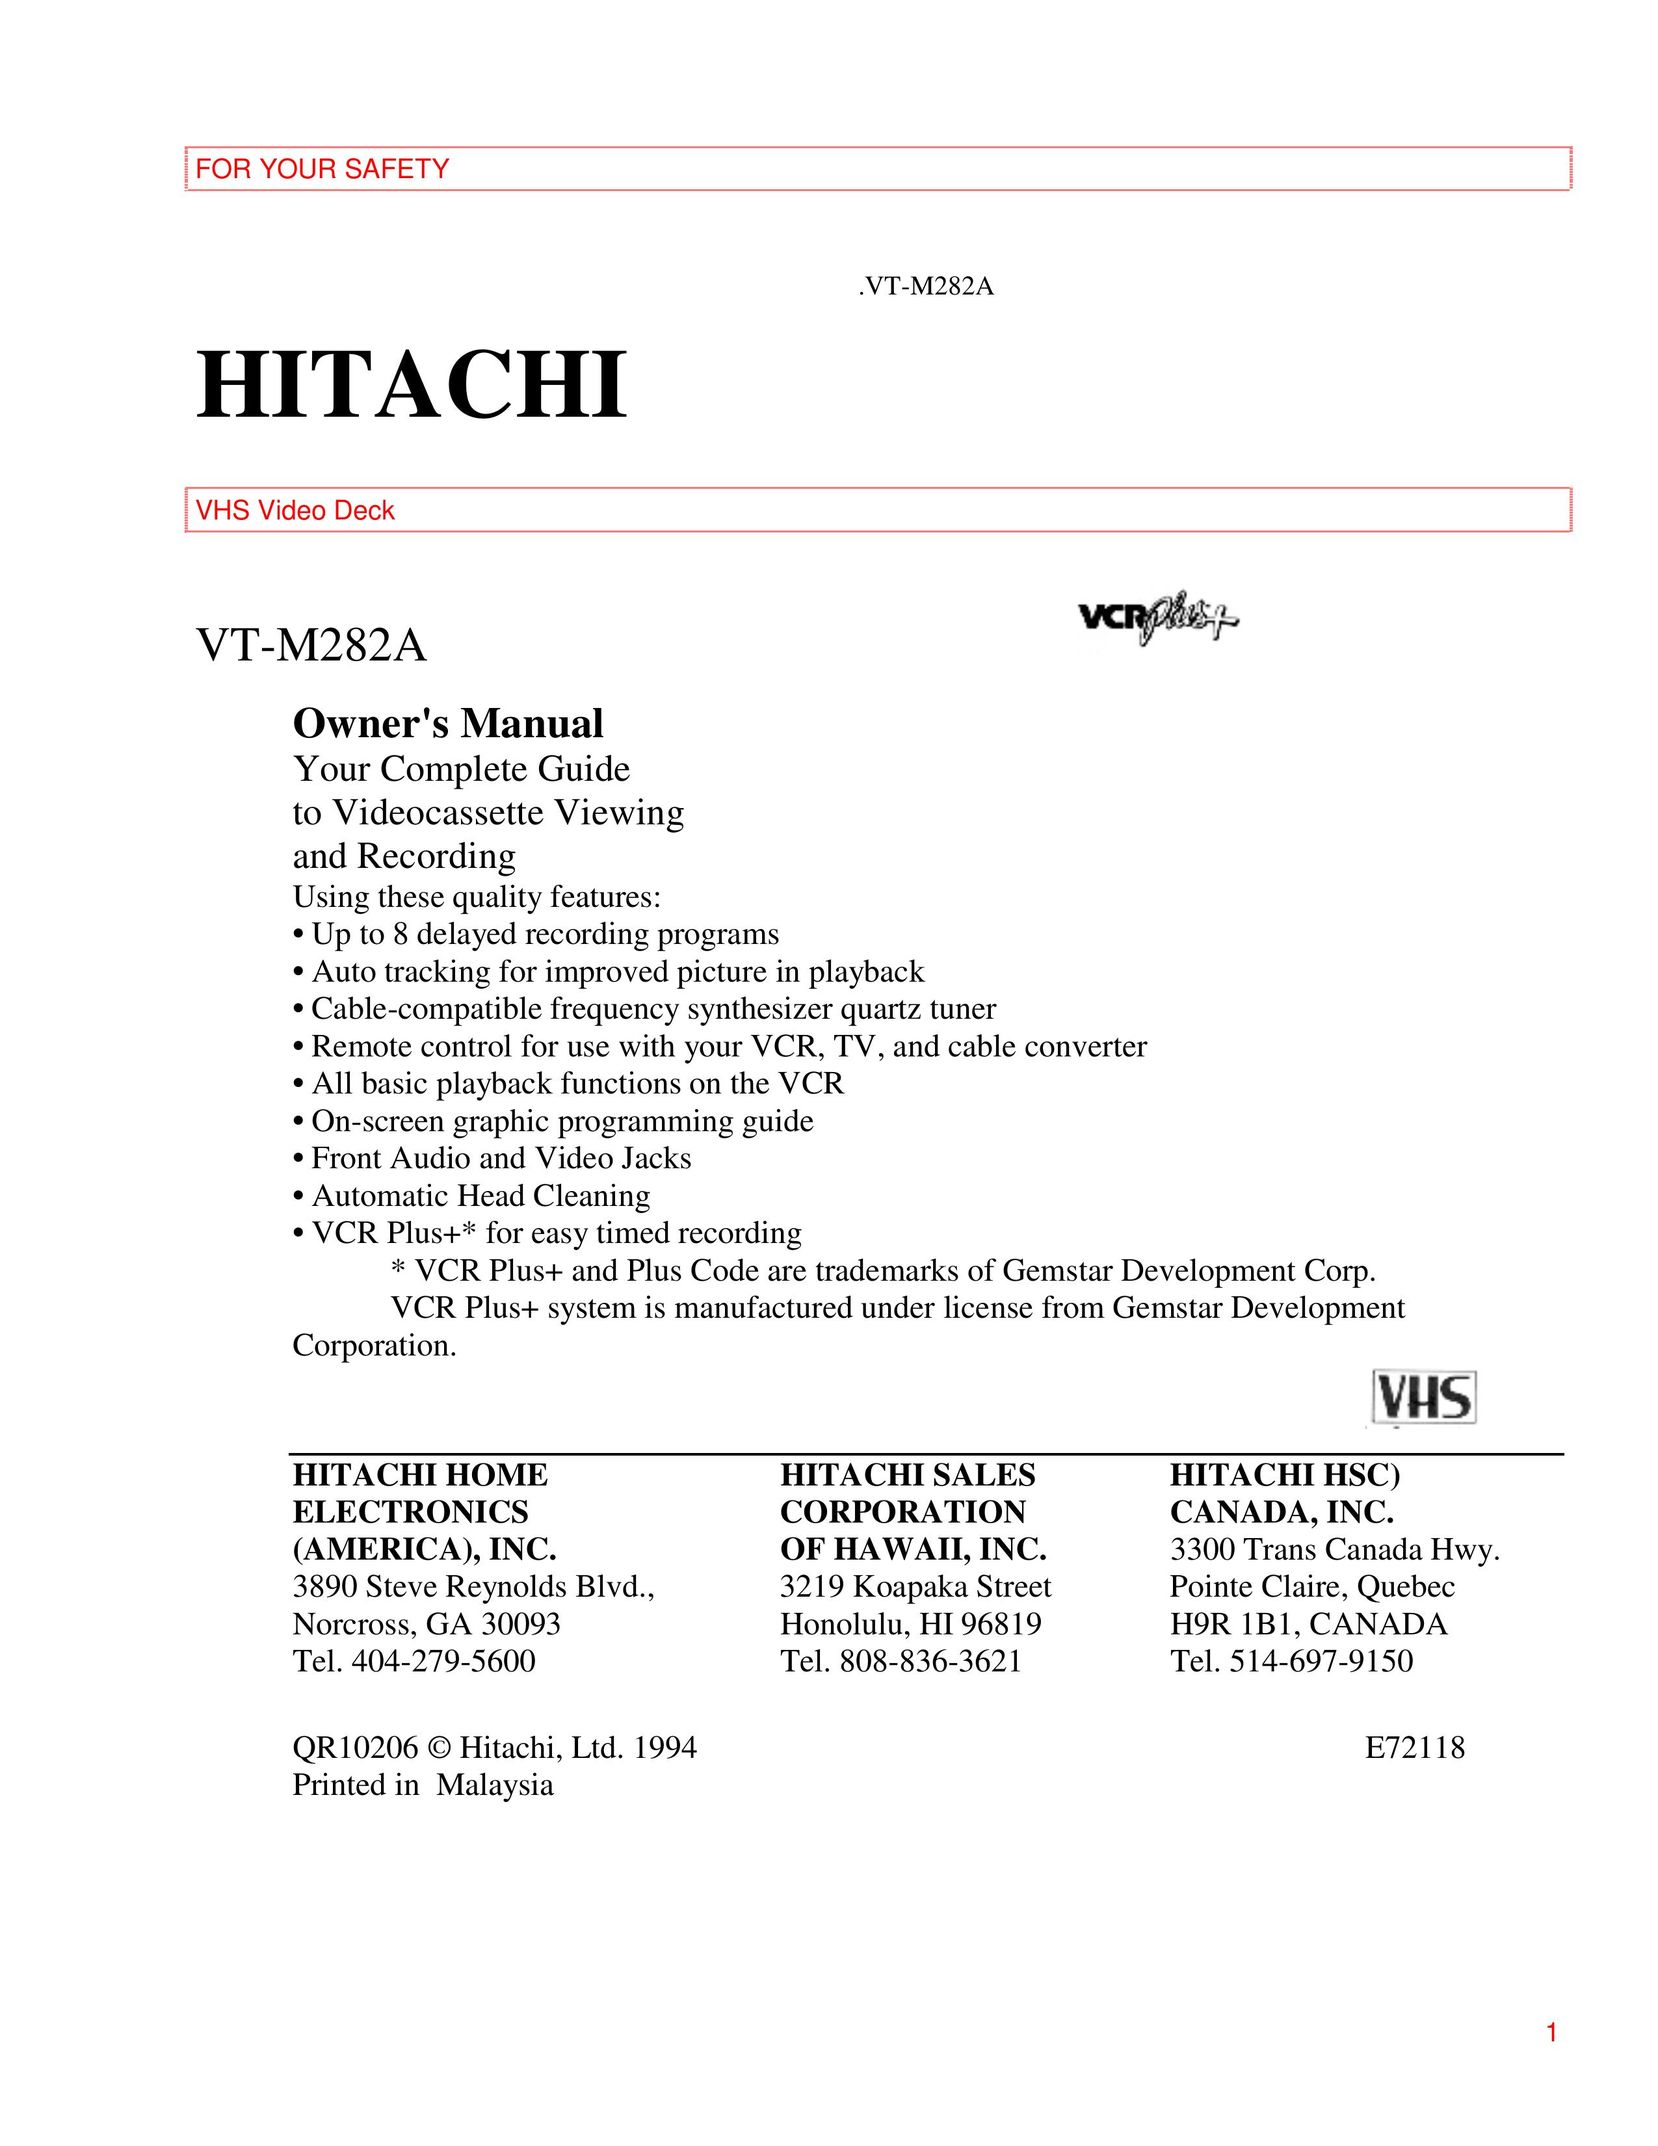 Hitachi VT-M282A Portable DVD Player User Manual